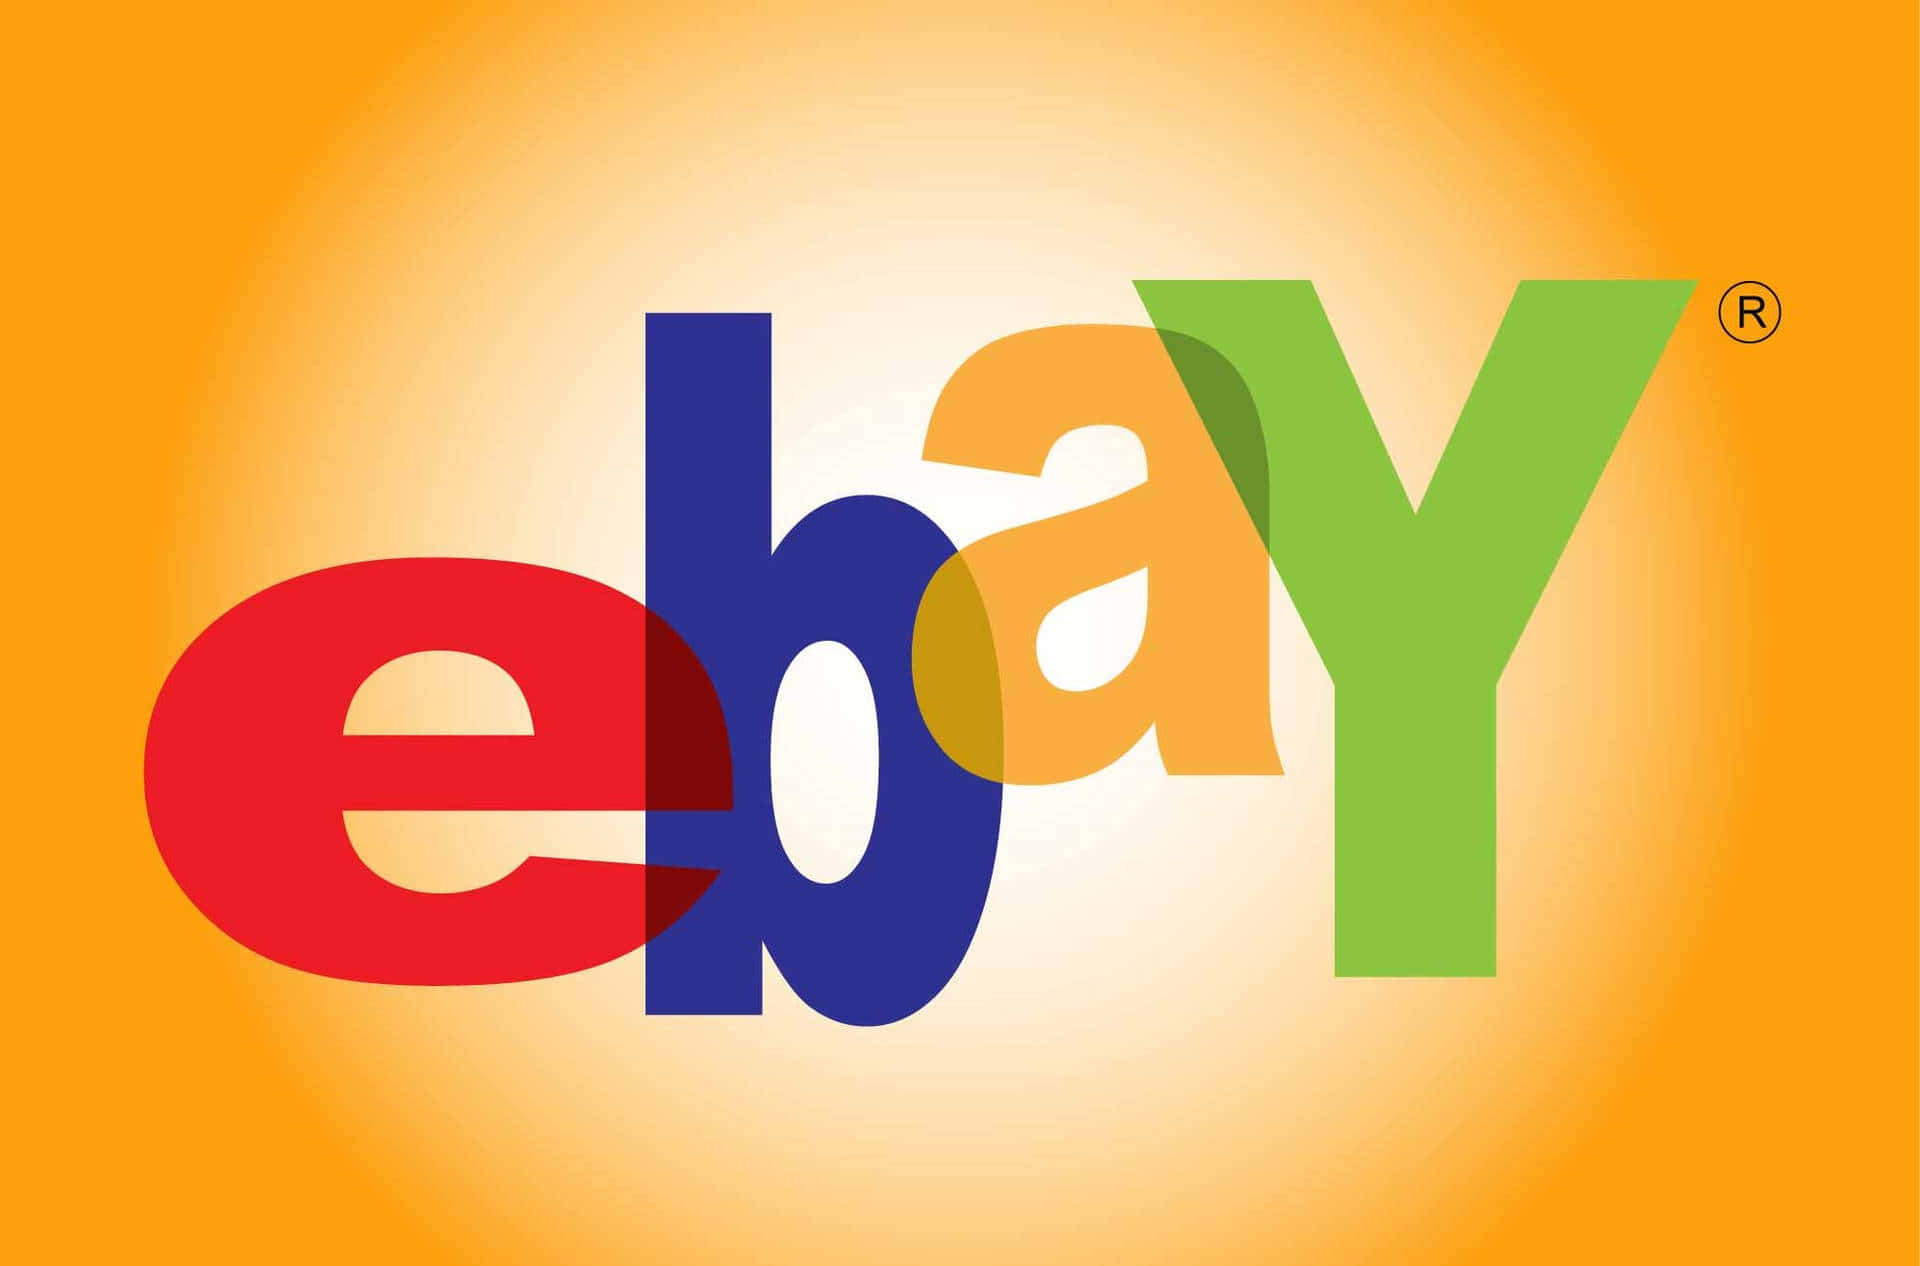 Logode Ebay Uk En Degradado De Color Naranja Fondo de pantalla